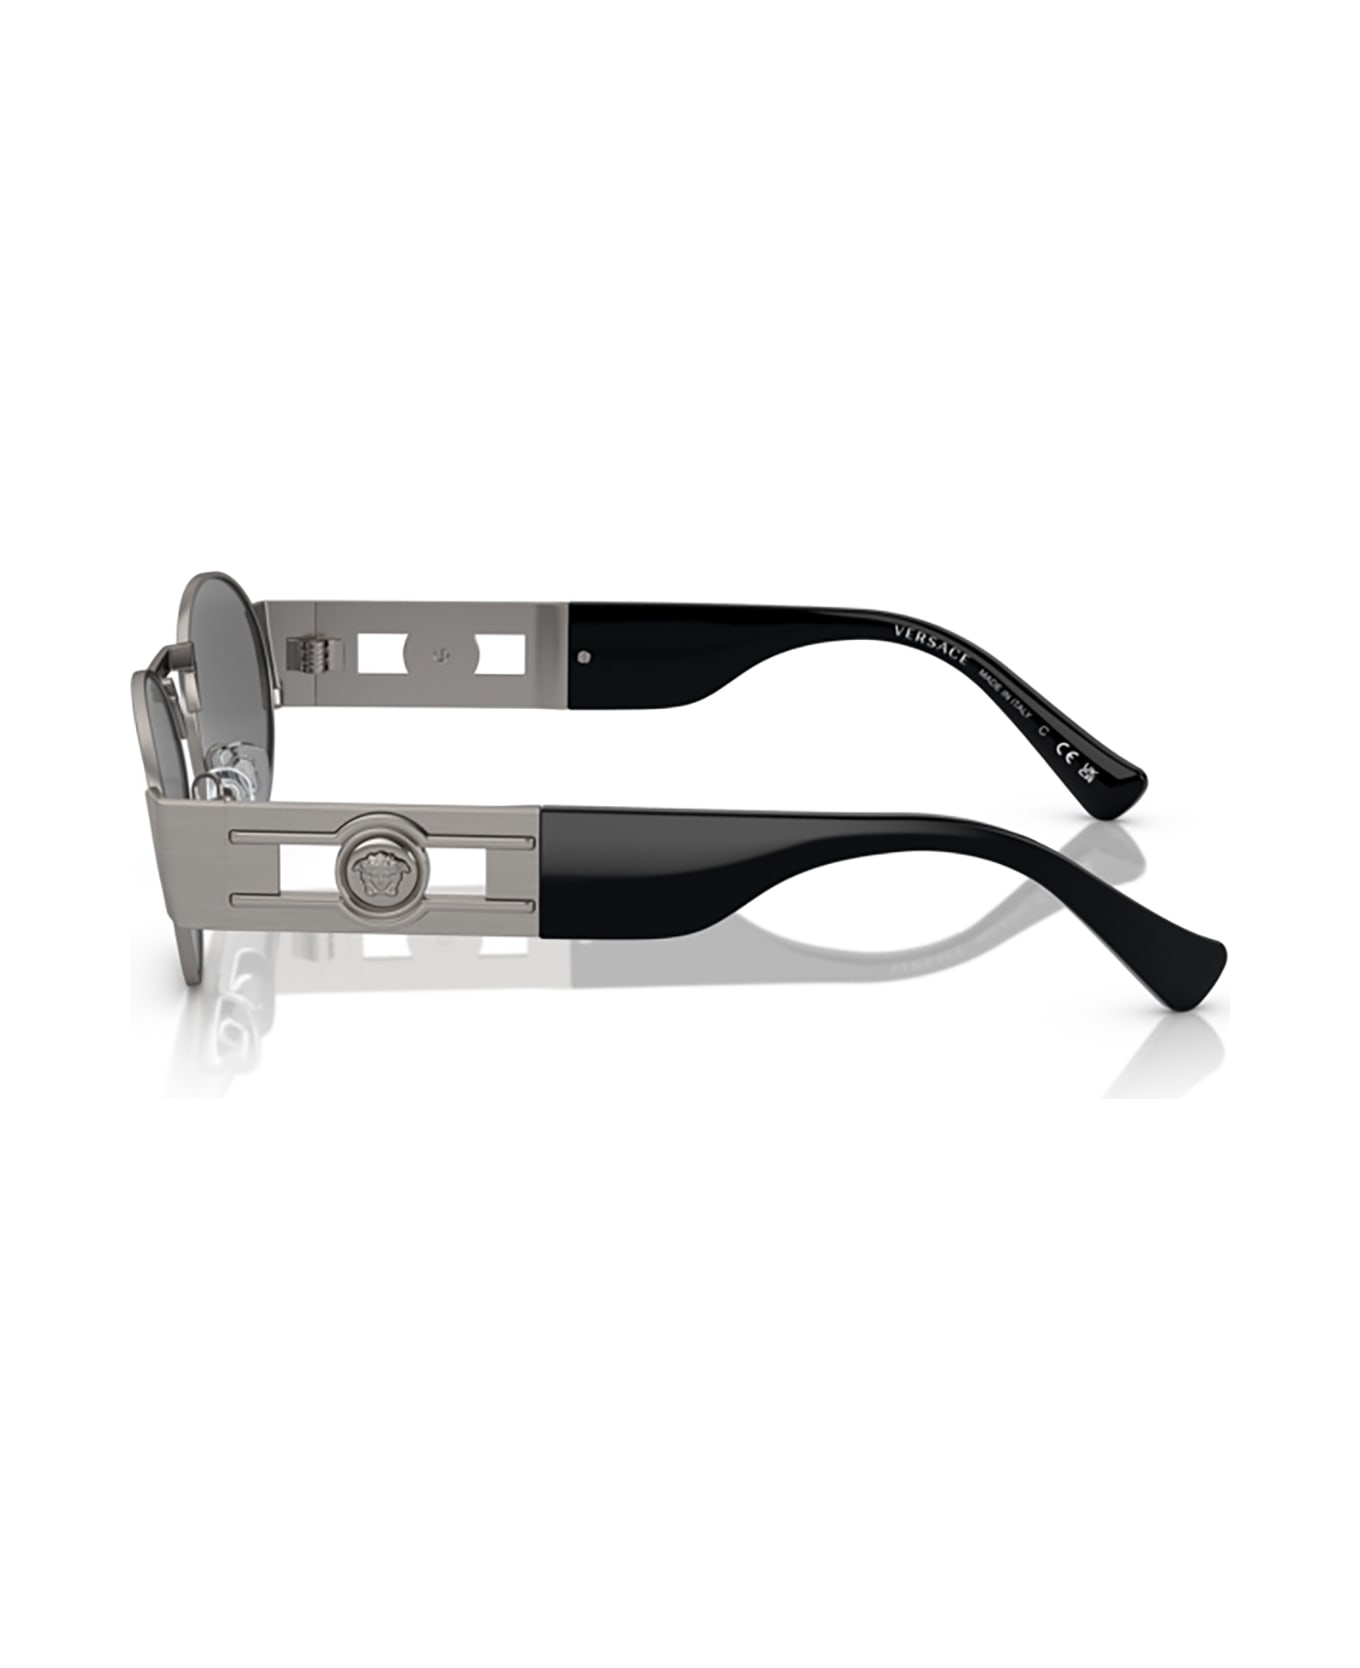 Versace Eyewear Ve2264 Matte Gunmetal Sunglasses - Matte gunmetal サングラス